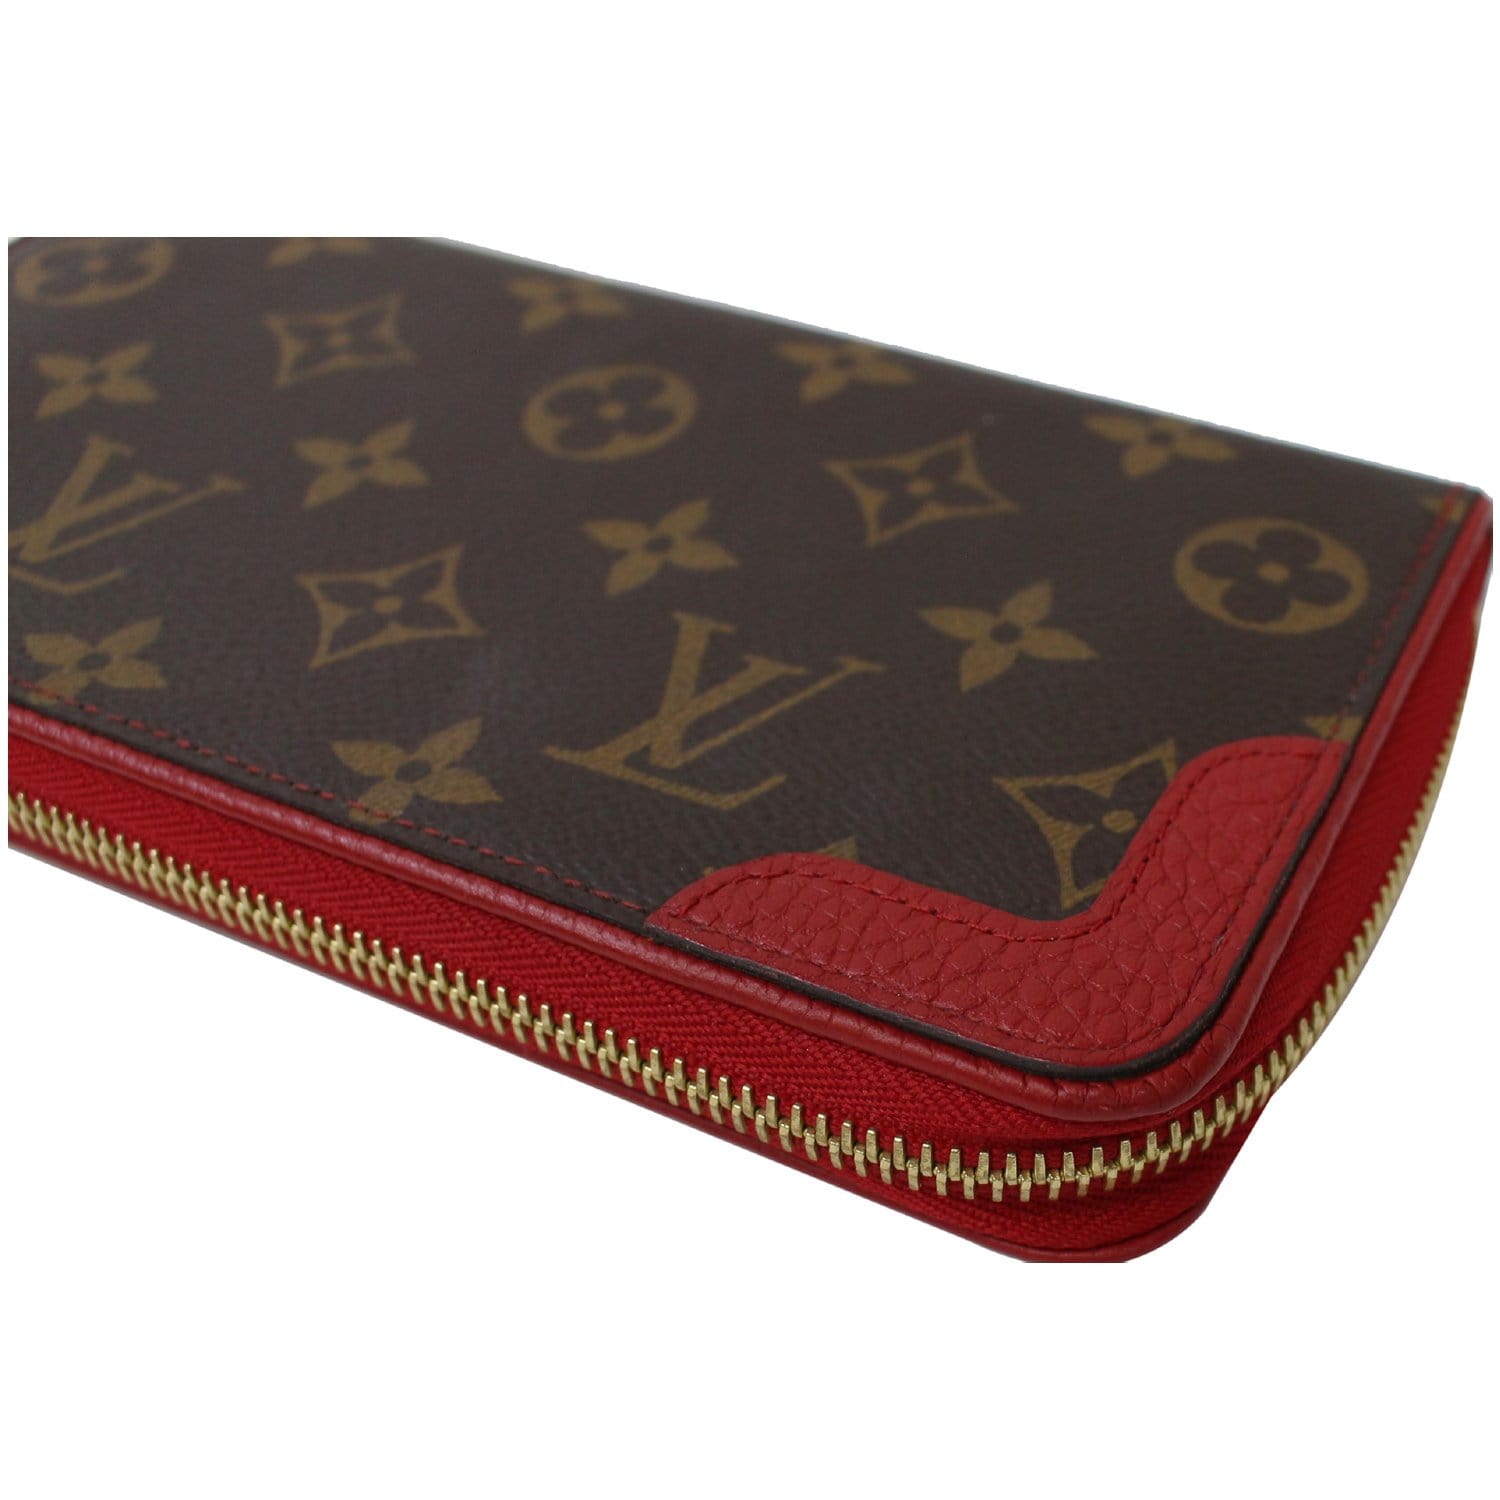 Billetera Louis Vuitton Zippy en charol Monogram rojo